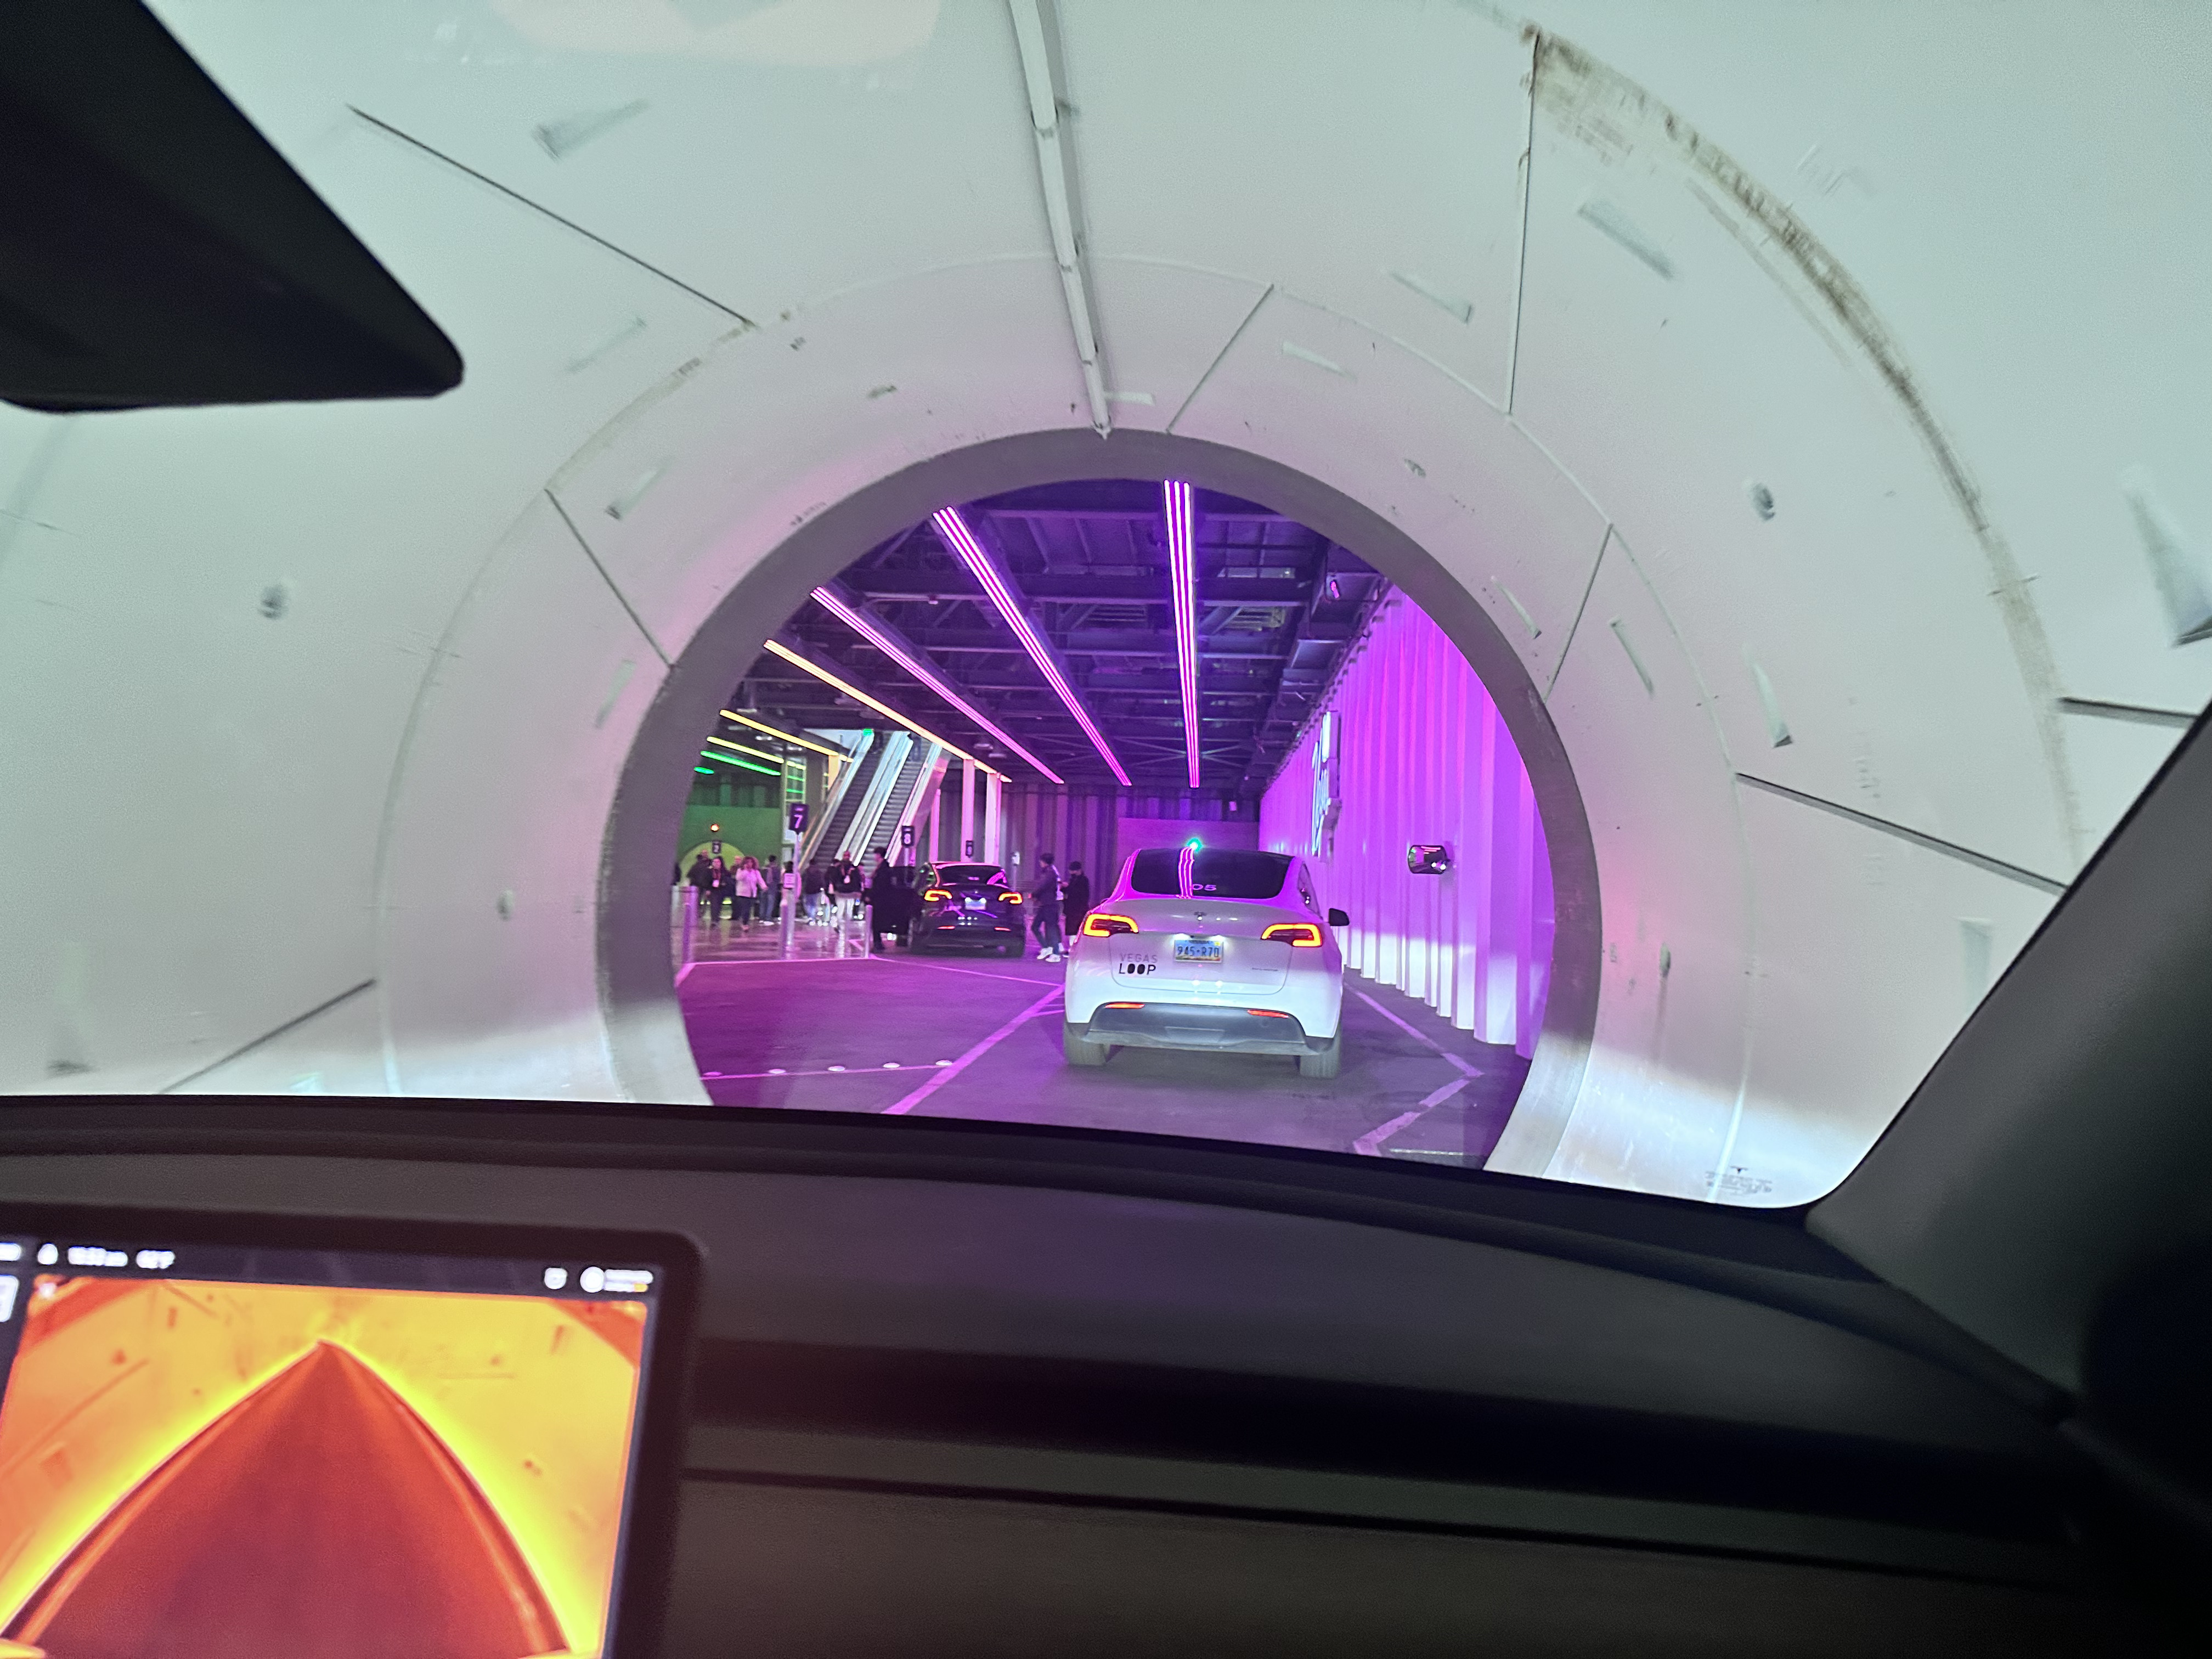 The Boring Company's LVCC Loop opens to the public tomorrow - Drive Tesla